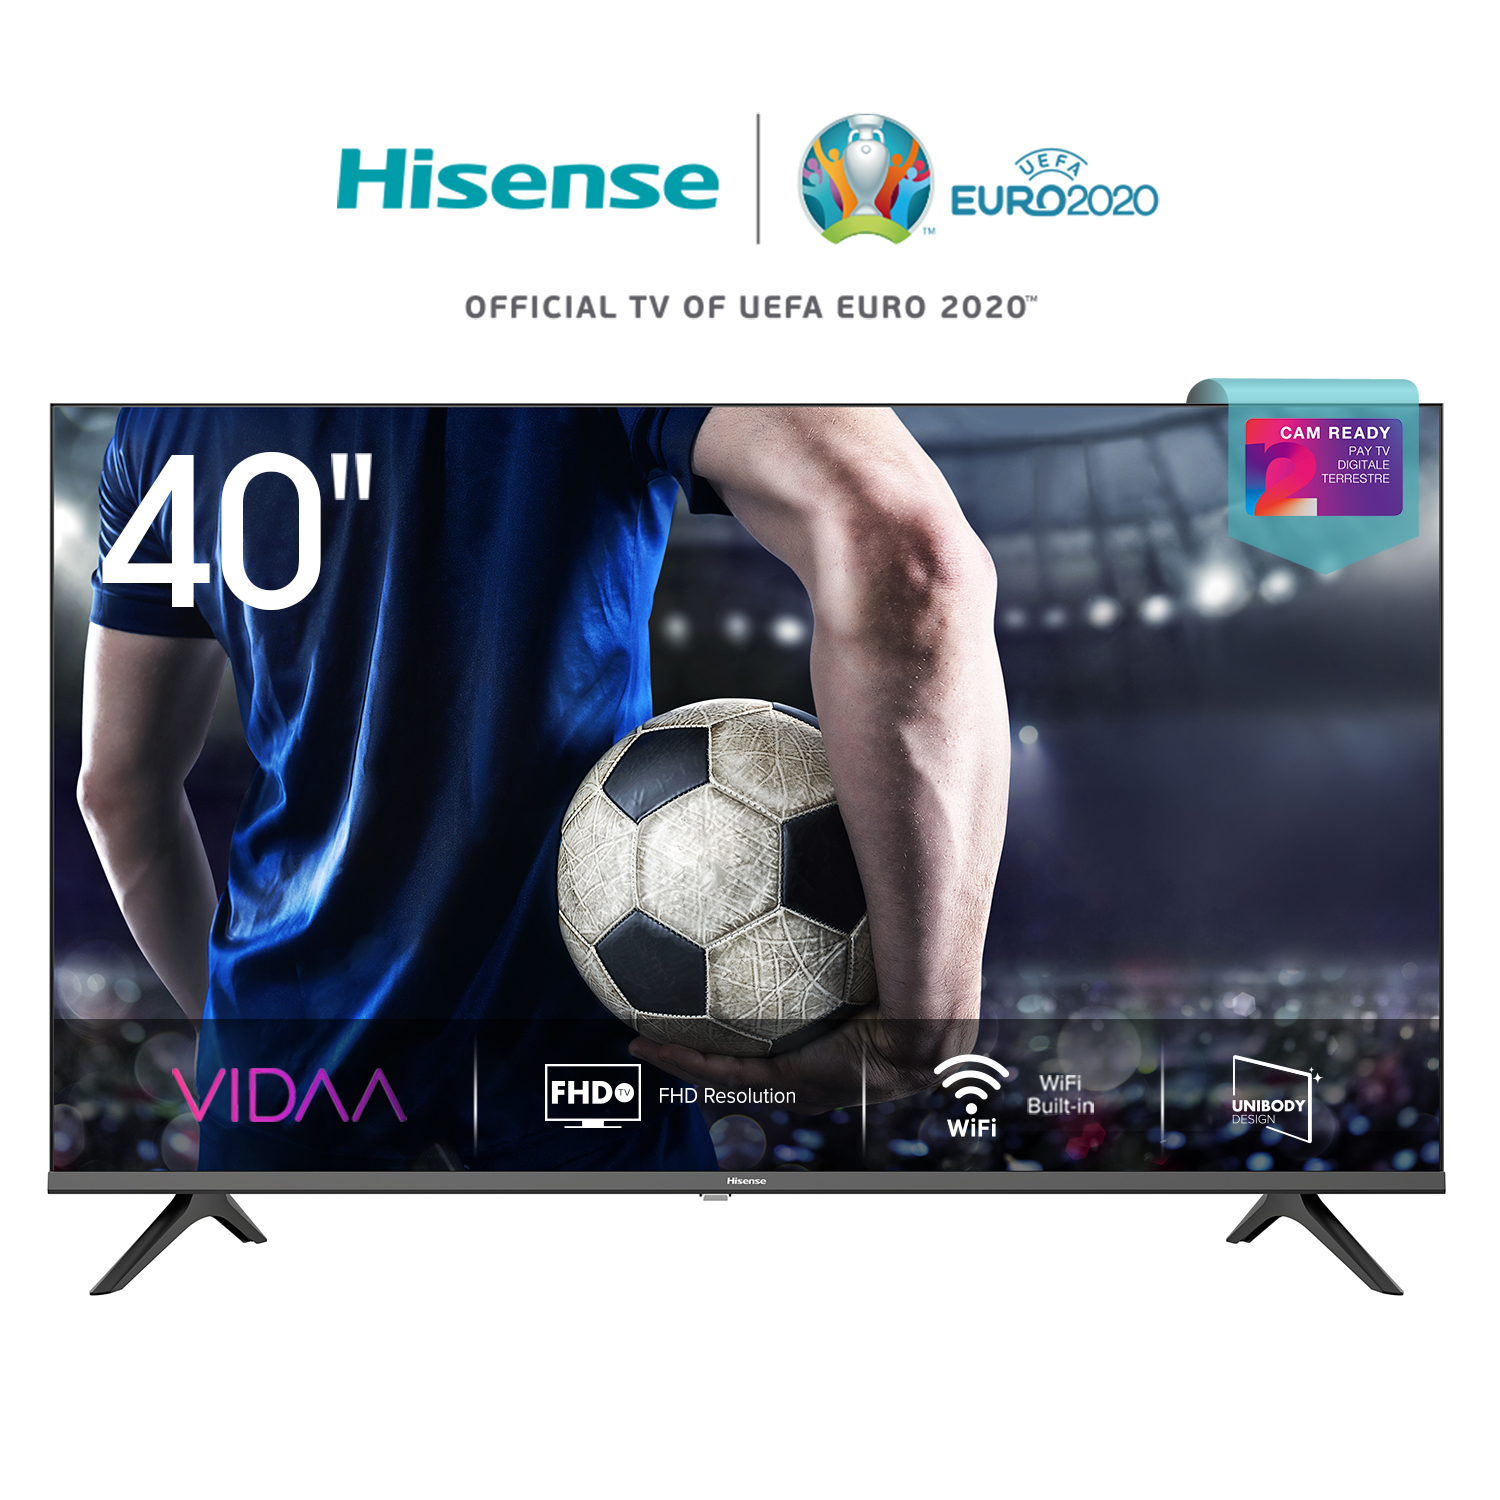 Hisense A5600F 40A5600F TV